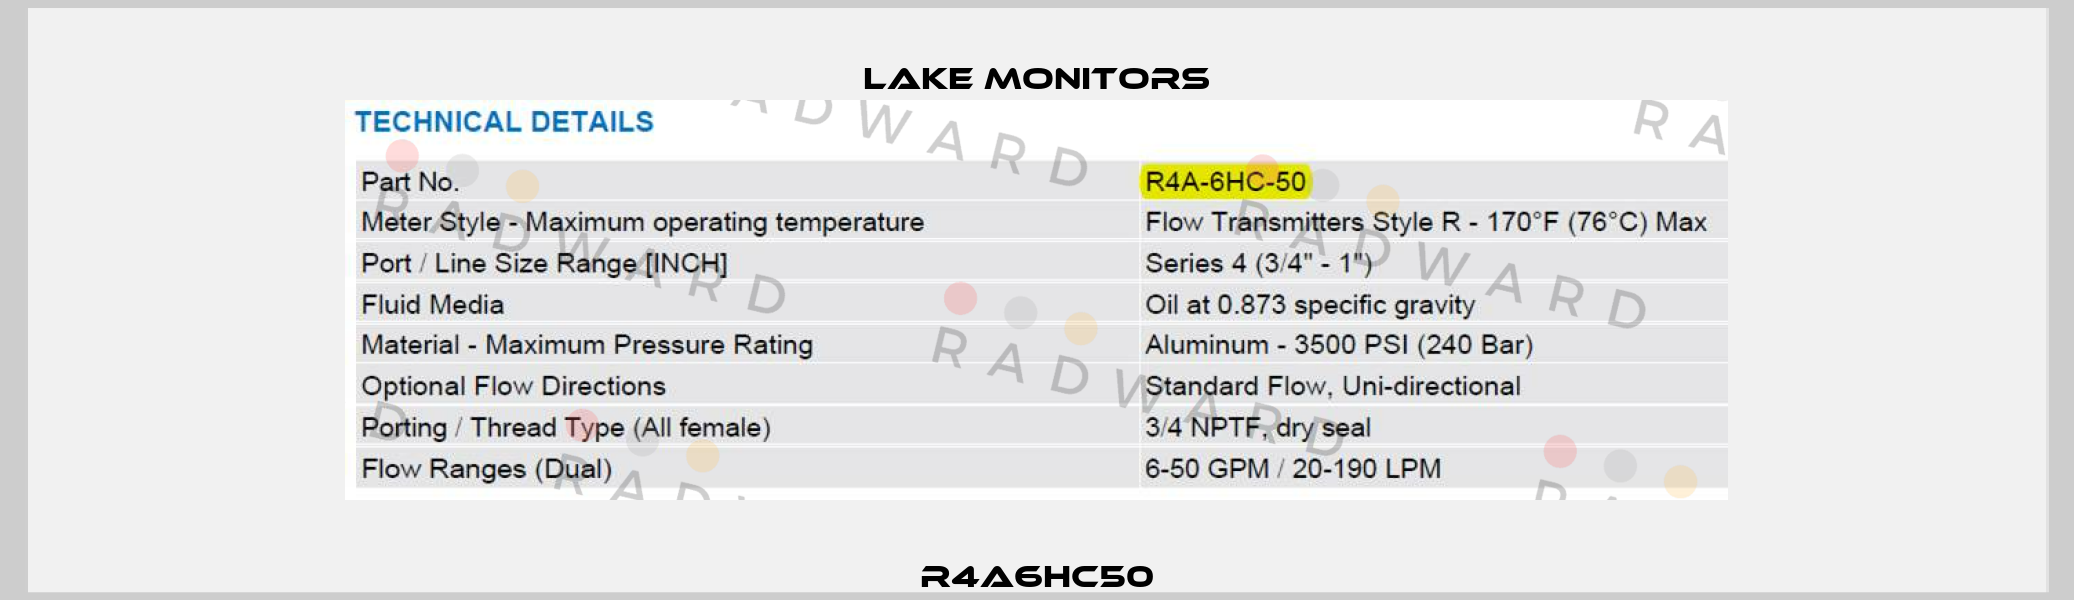 R4A6HC50 Lake Monitors